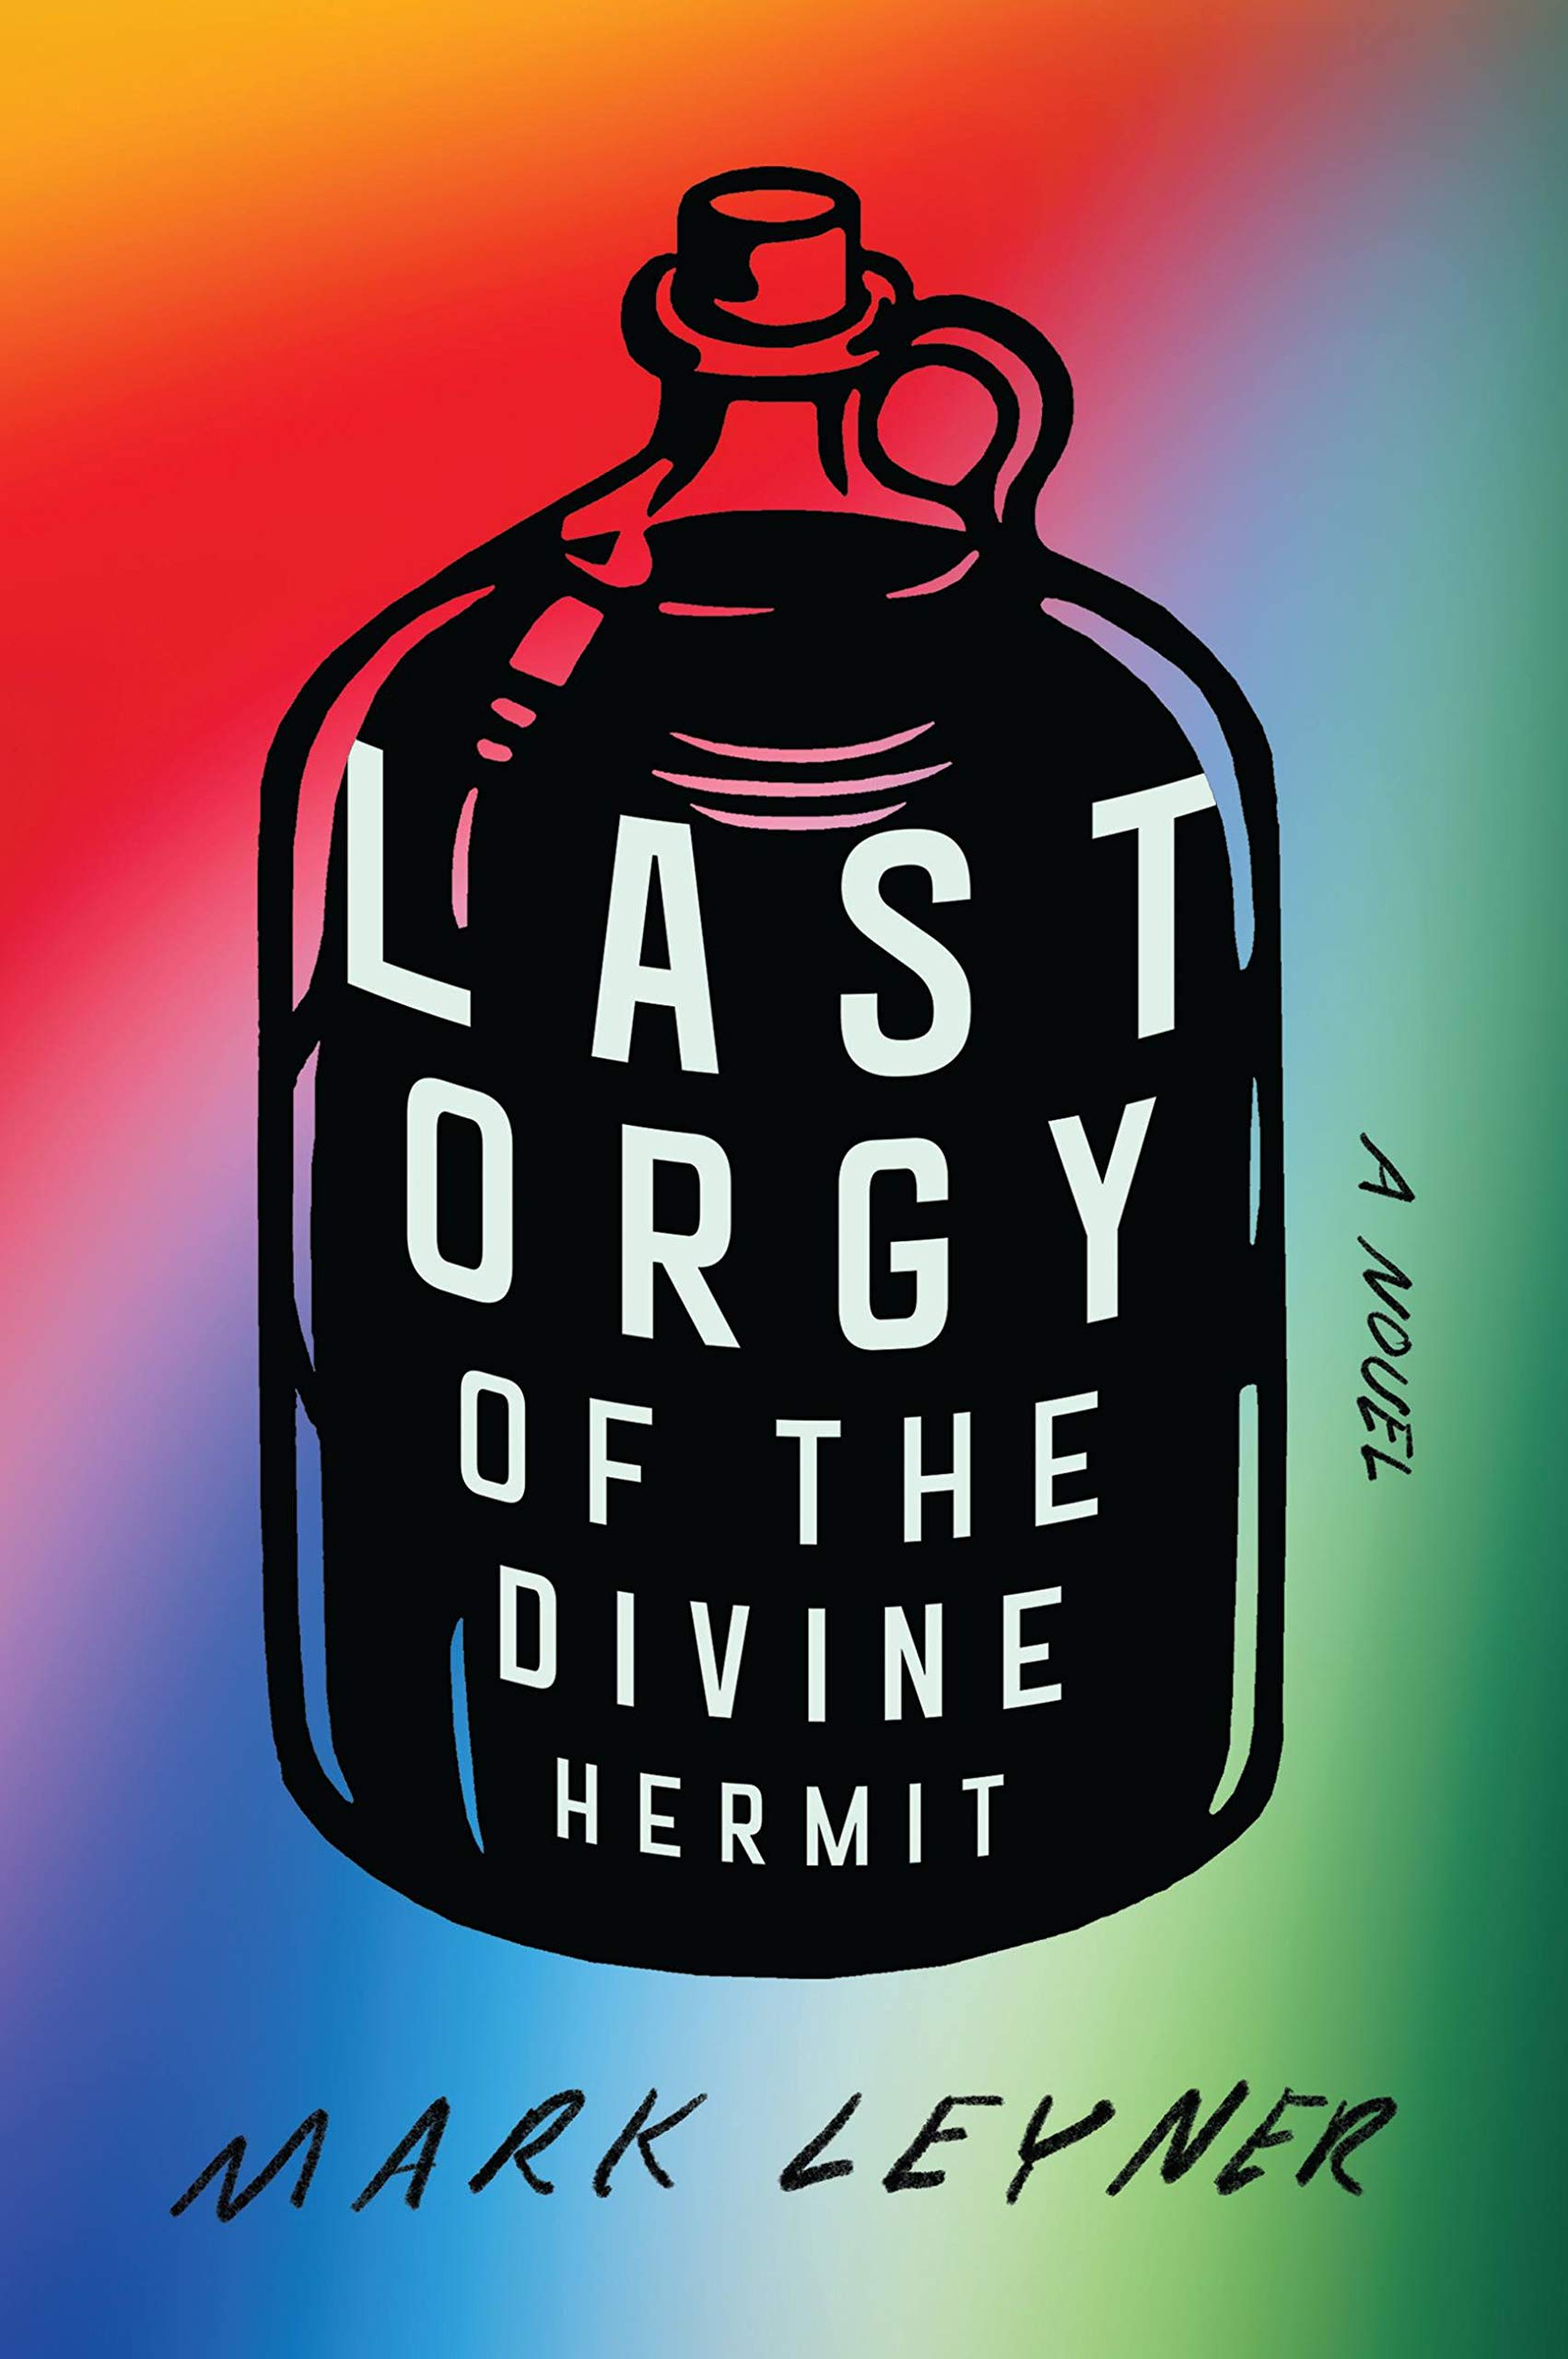 Last orgy of the divine hermit